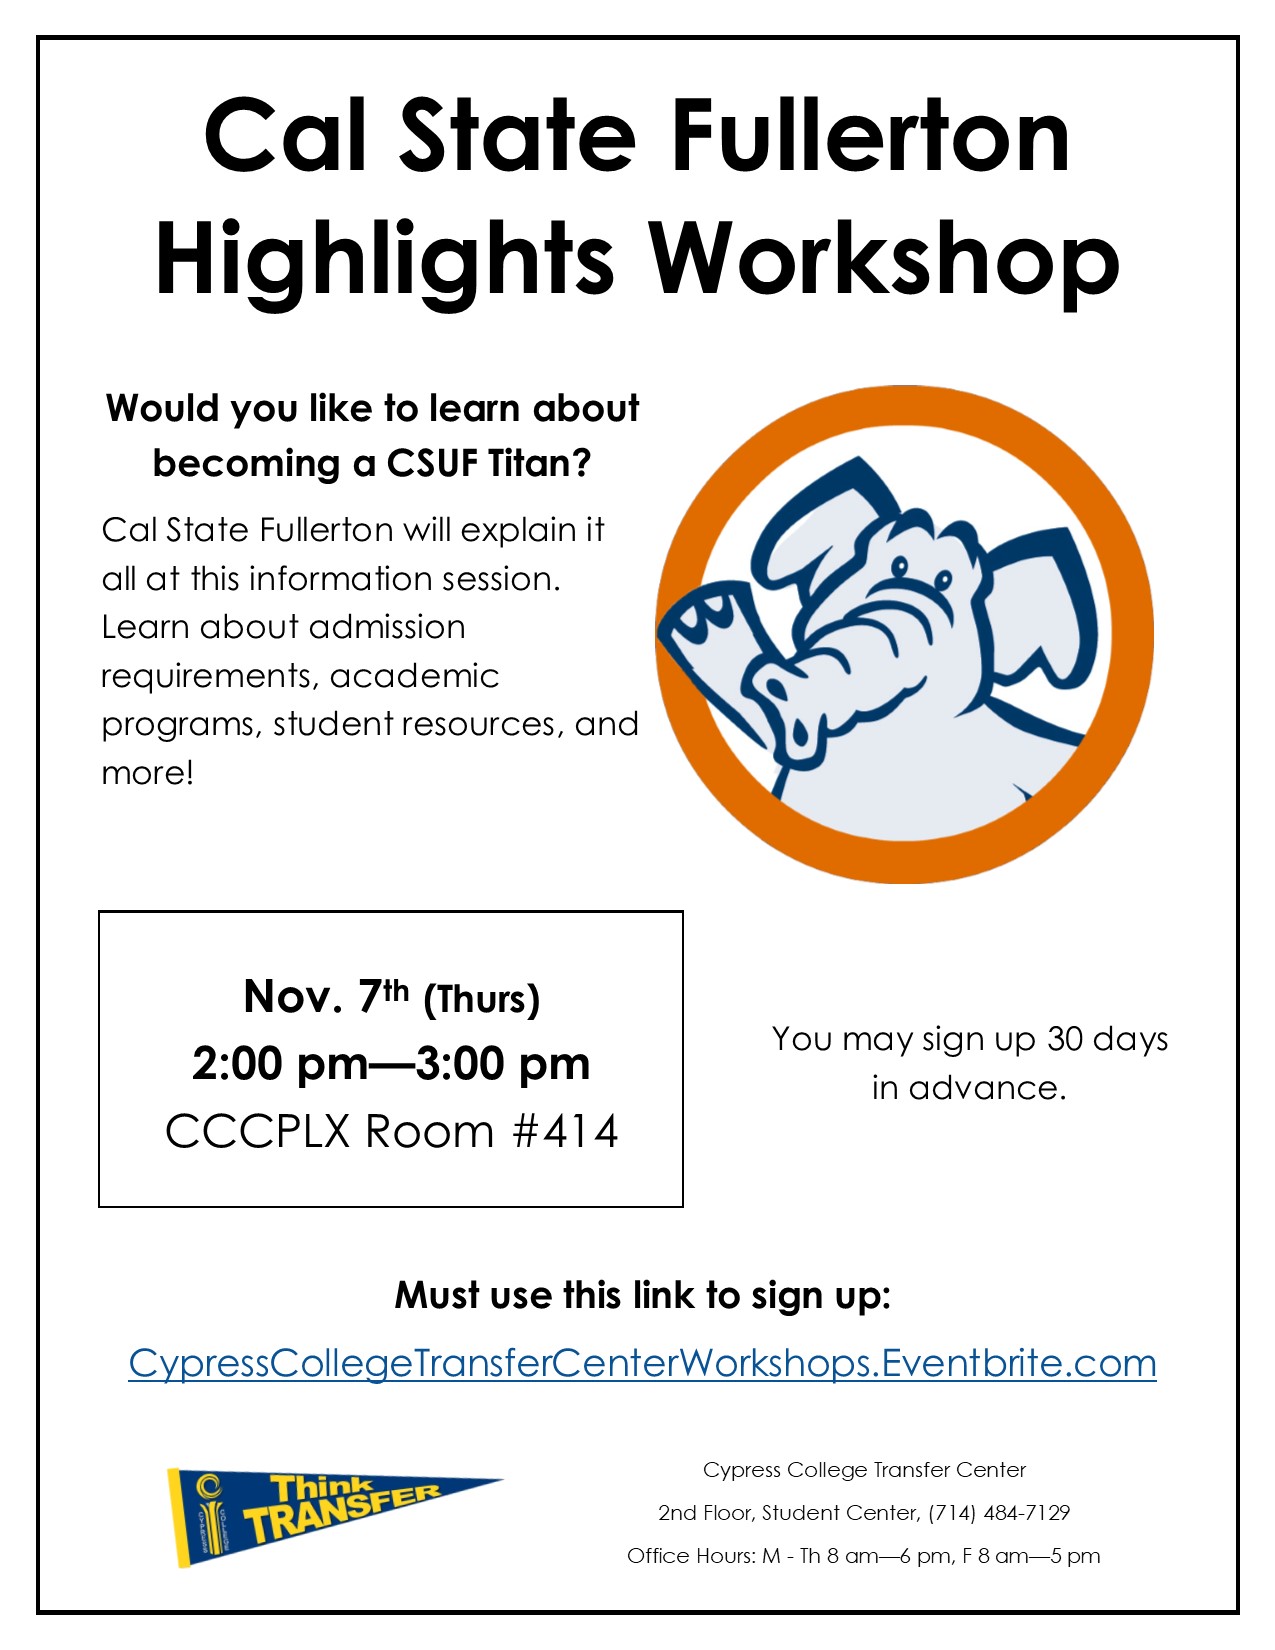 cal-state-fullerton-highlights-workshop-cypress-college